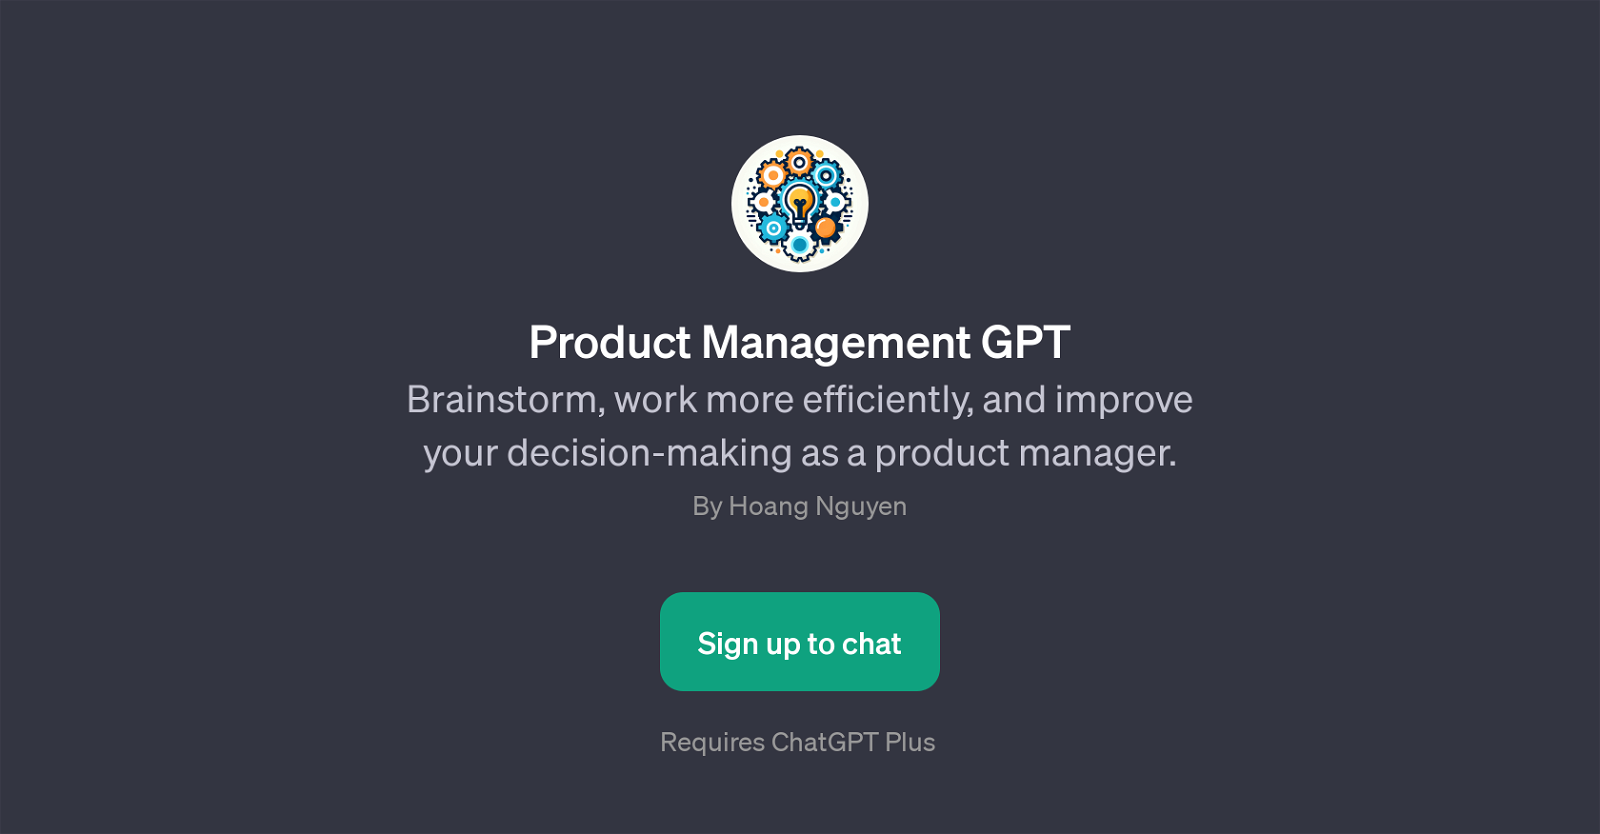 Product Management GPT website